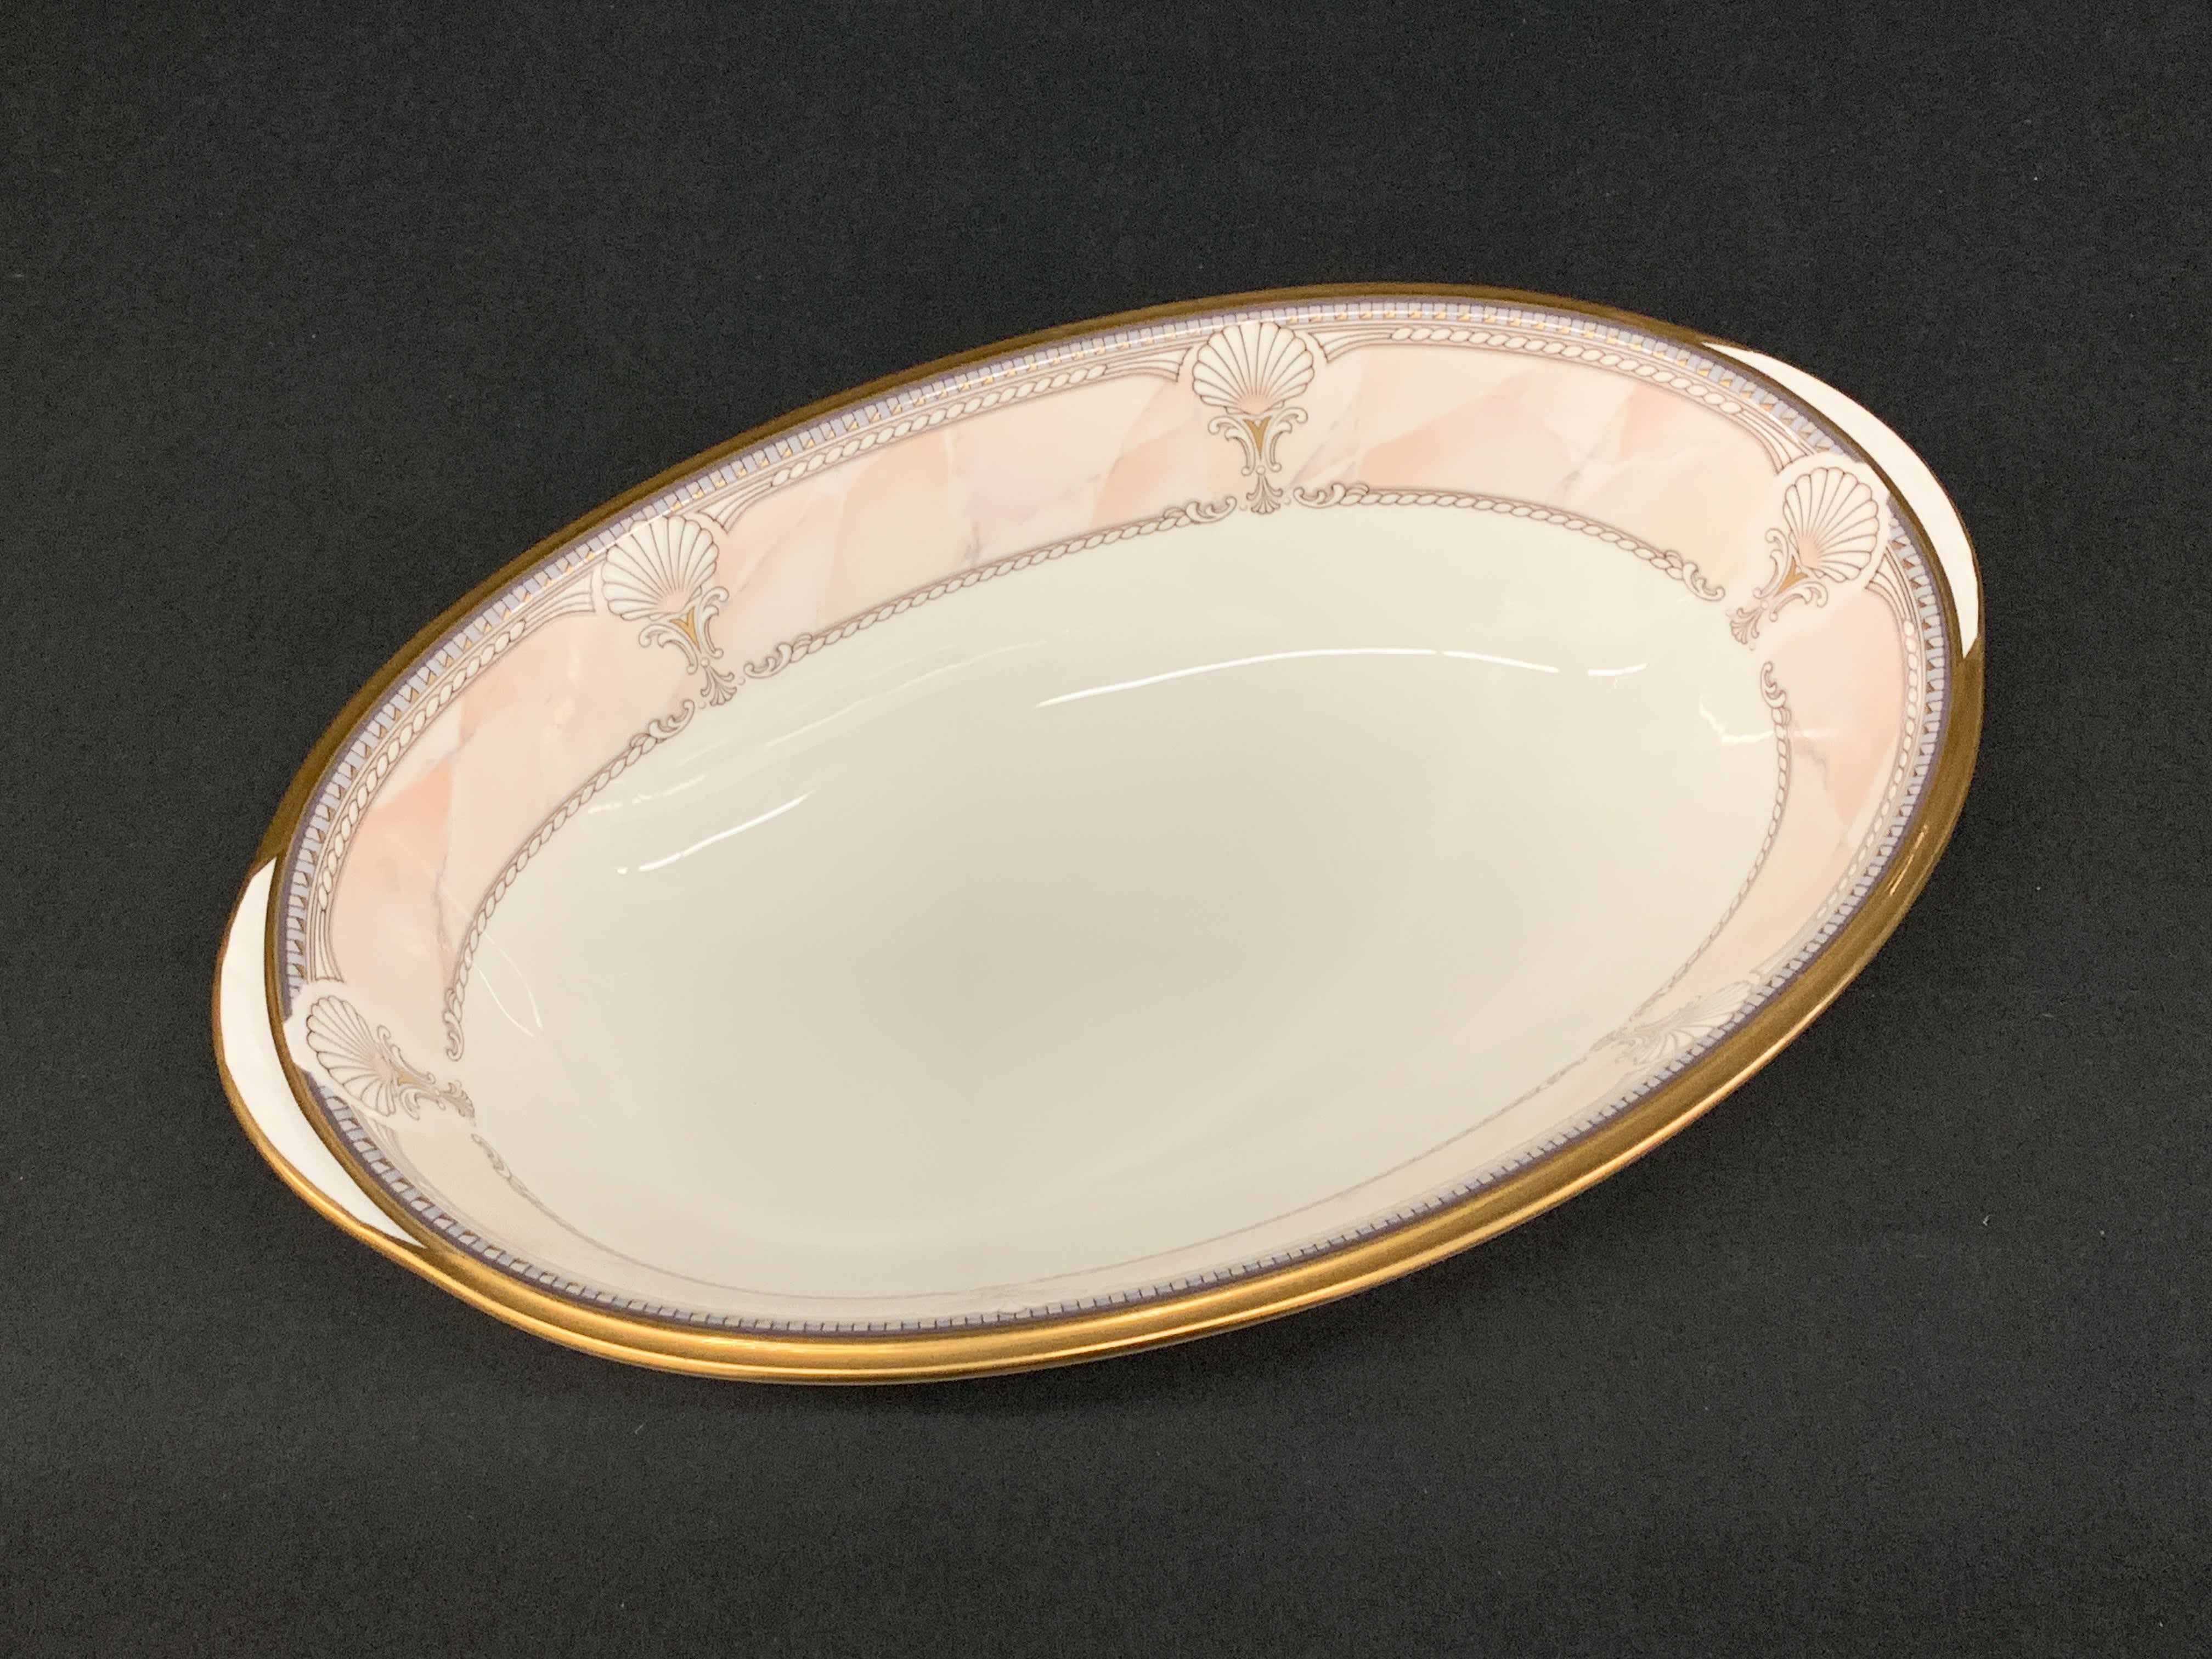 Noritake Pacific Majesty Pattern - Porcelain Fine China - Oval Vegetable Bowl